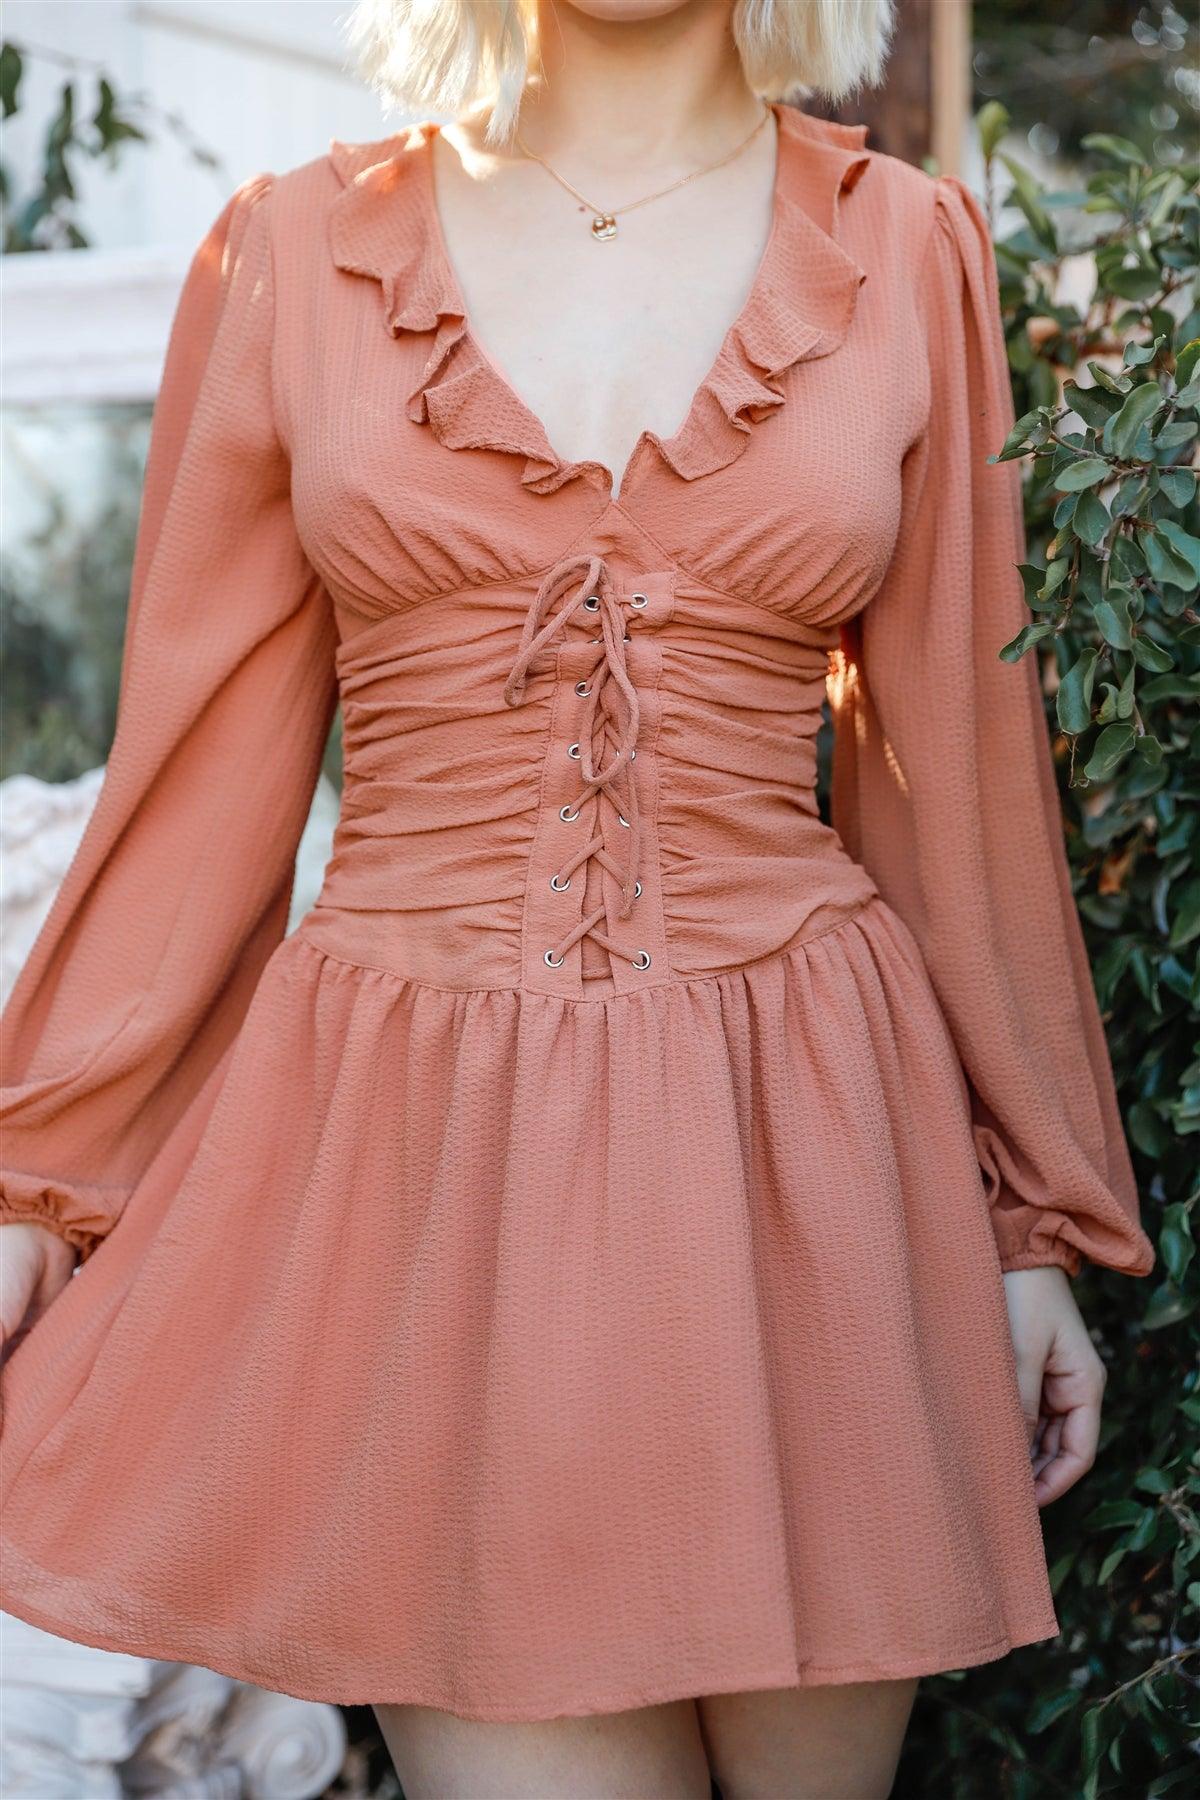 Ginger Textured Lace Up Waist Ruffled Collar Mini Dress /3-2-1